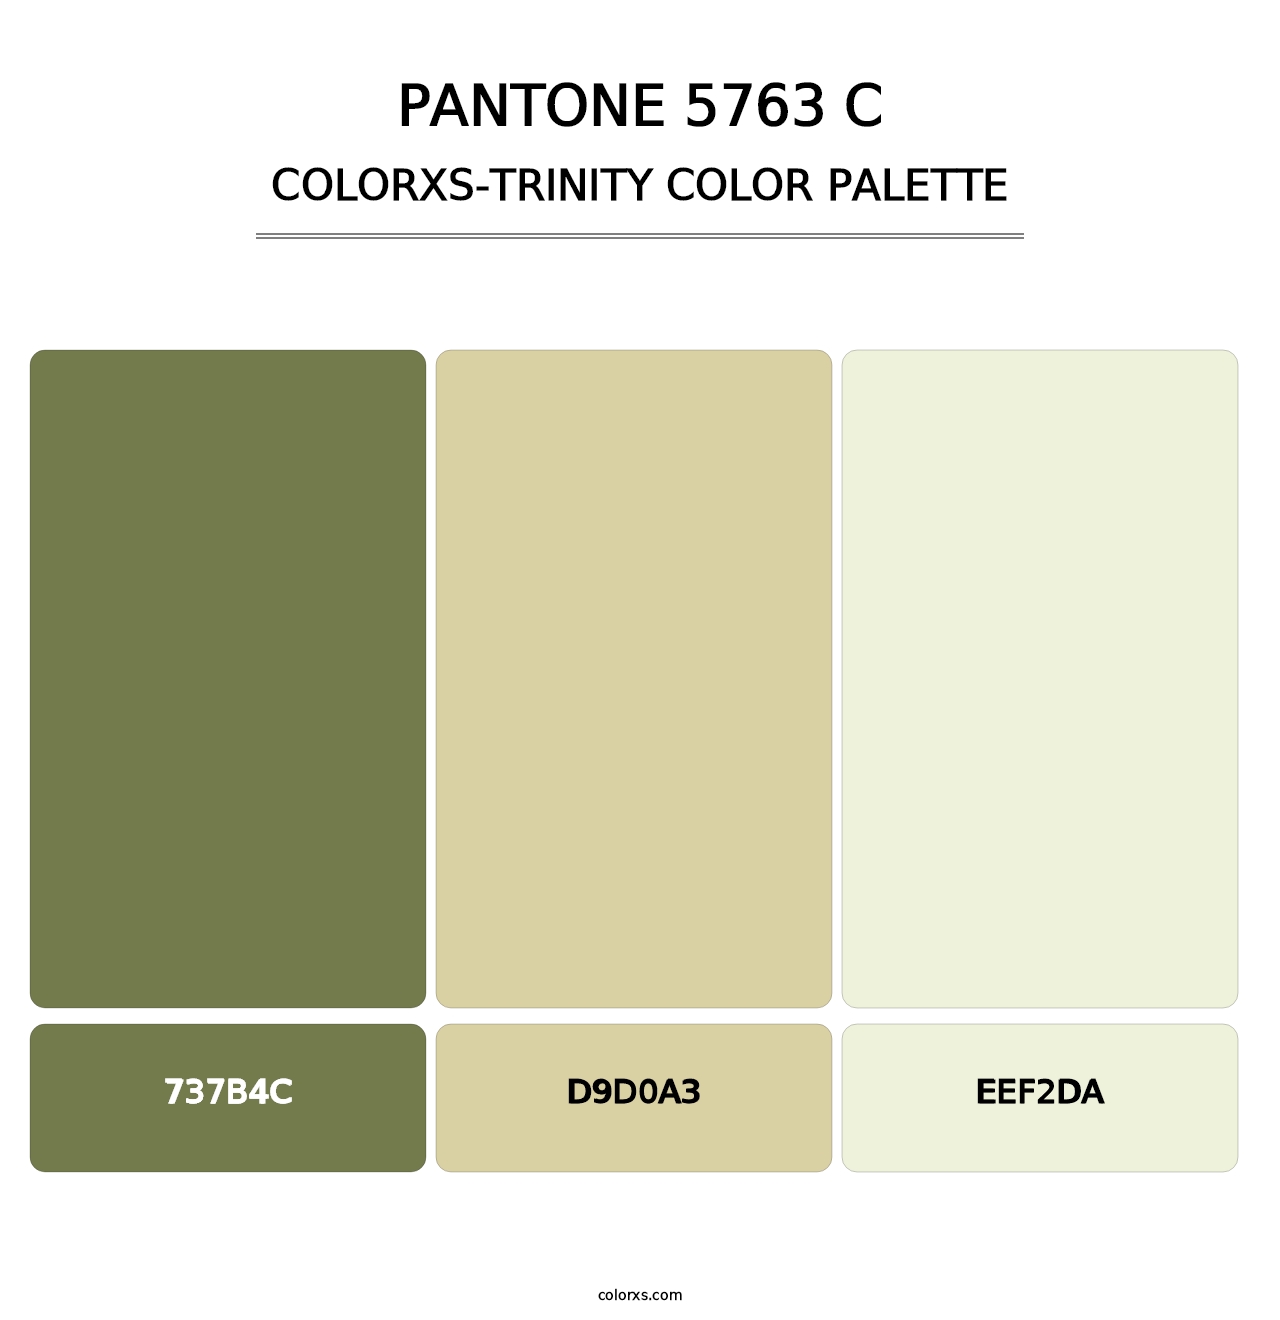 PANTONE 5763 C - Colorxs Trinity Palette